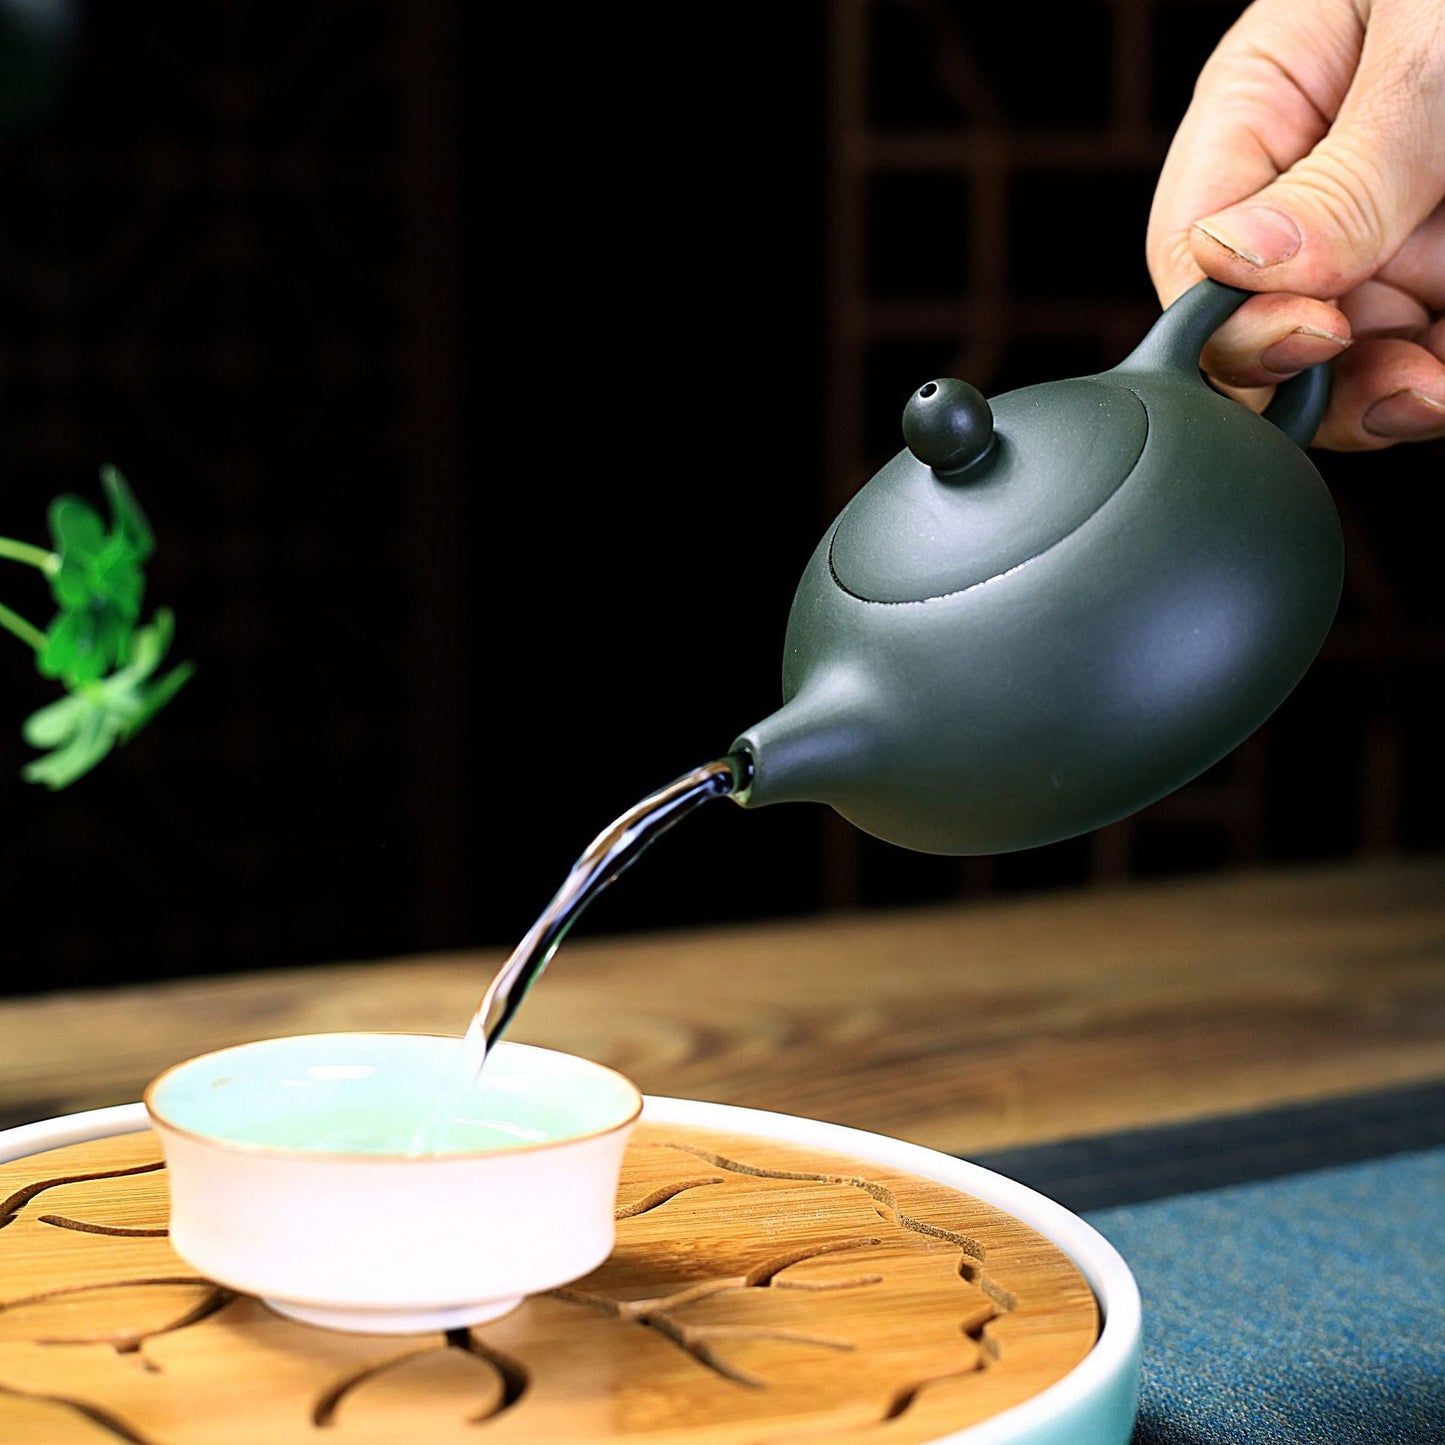 200ml autêntico yixing handmade tea panelas roxas argila beleza beleza chaleira teaware doméstico chinear chá de chá presente